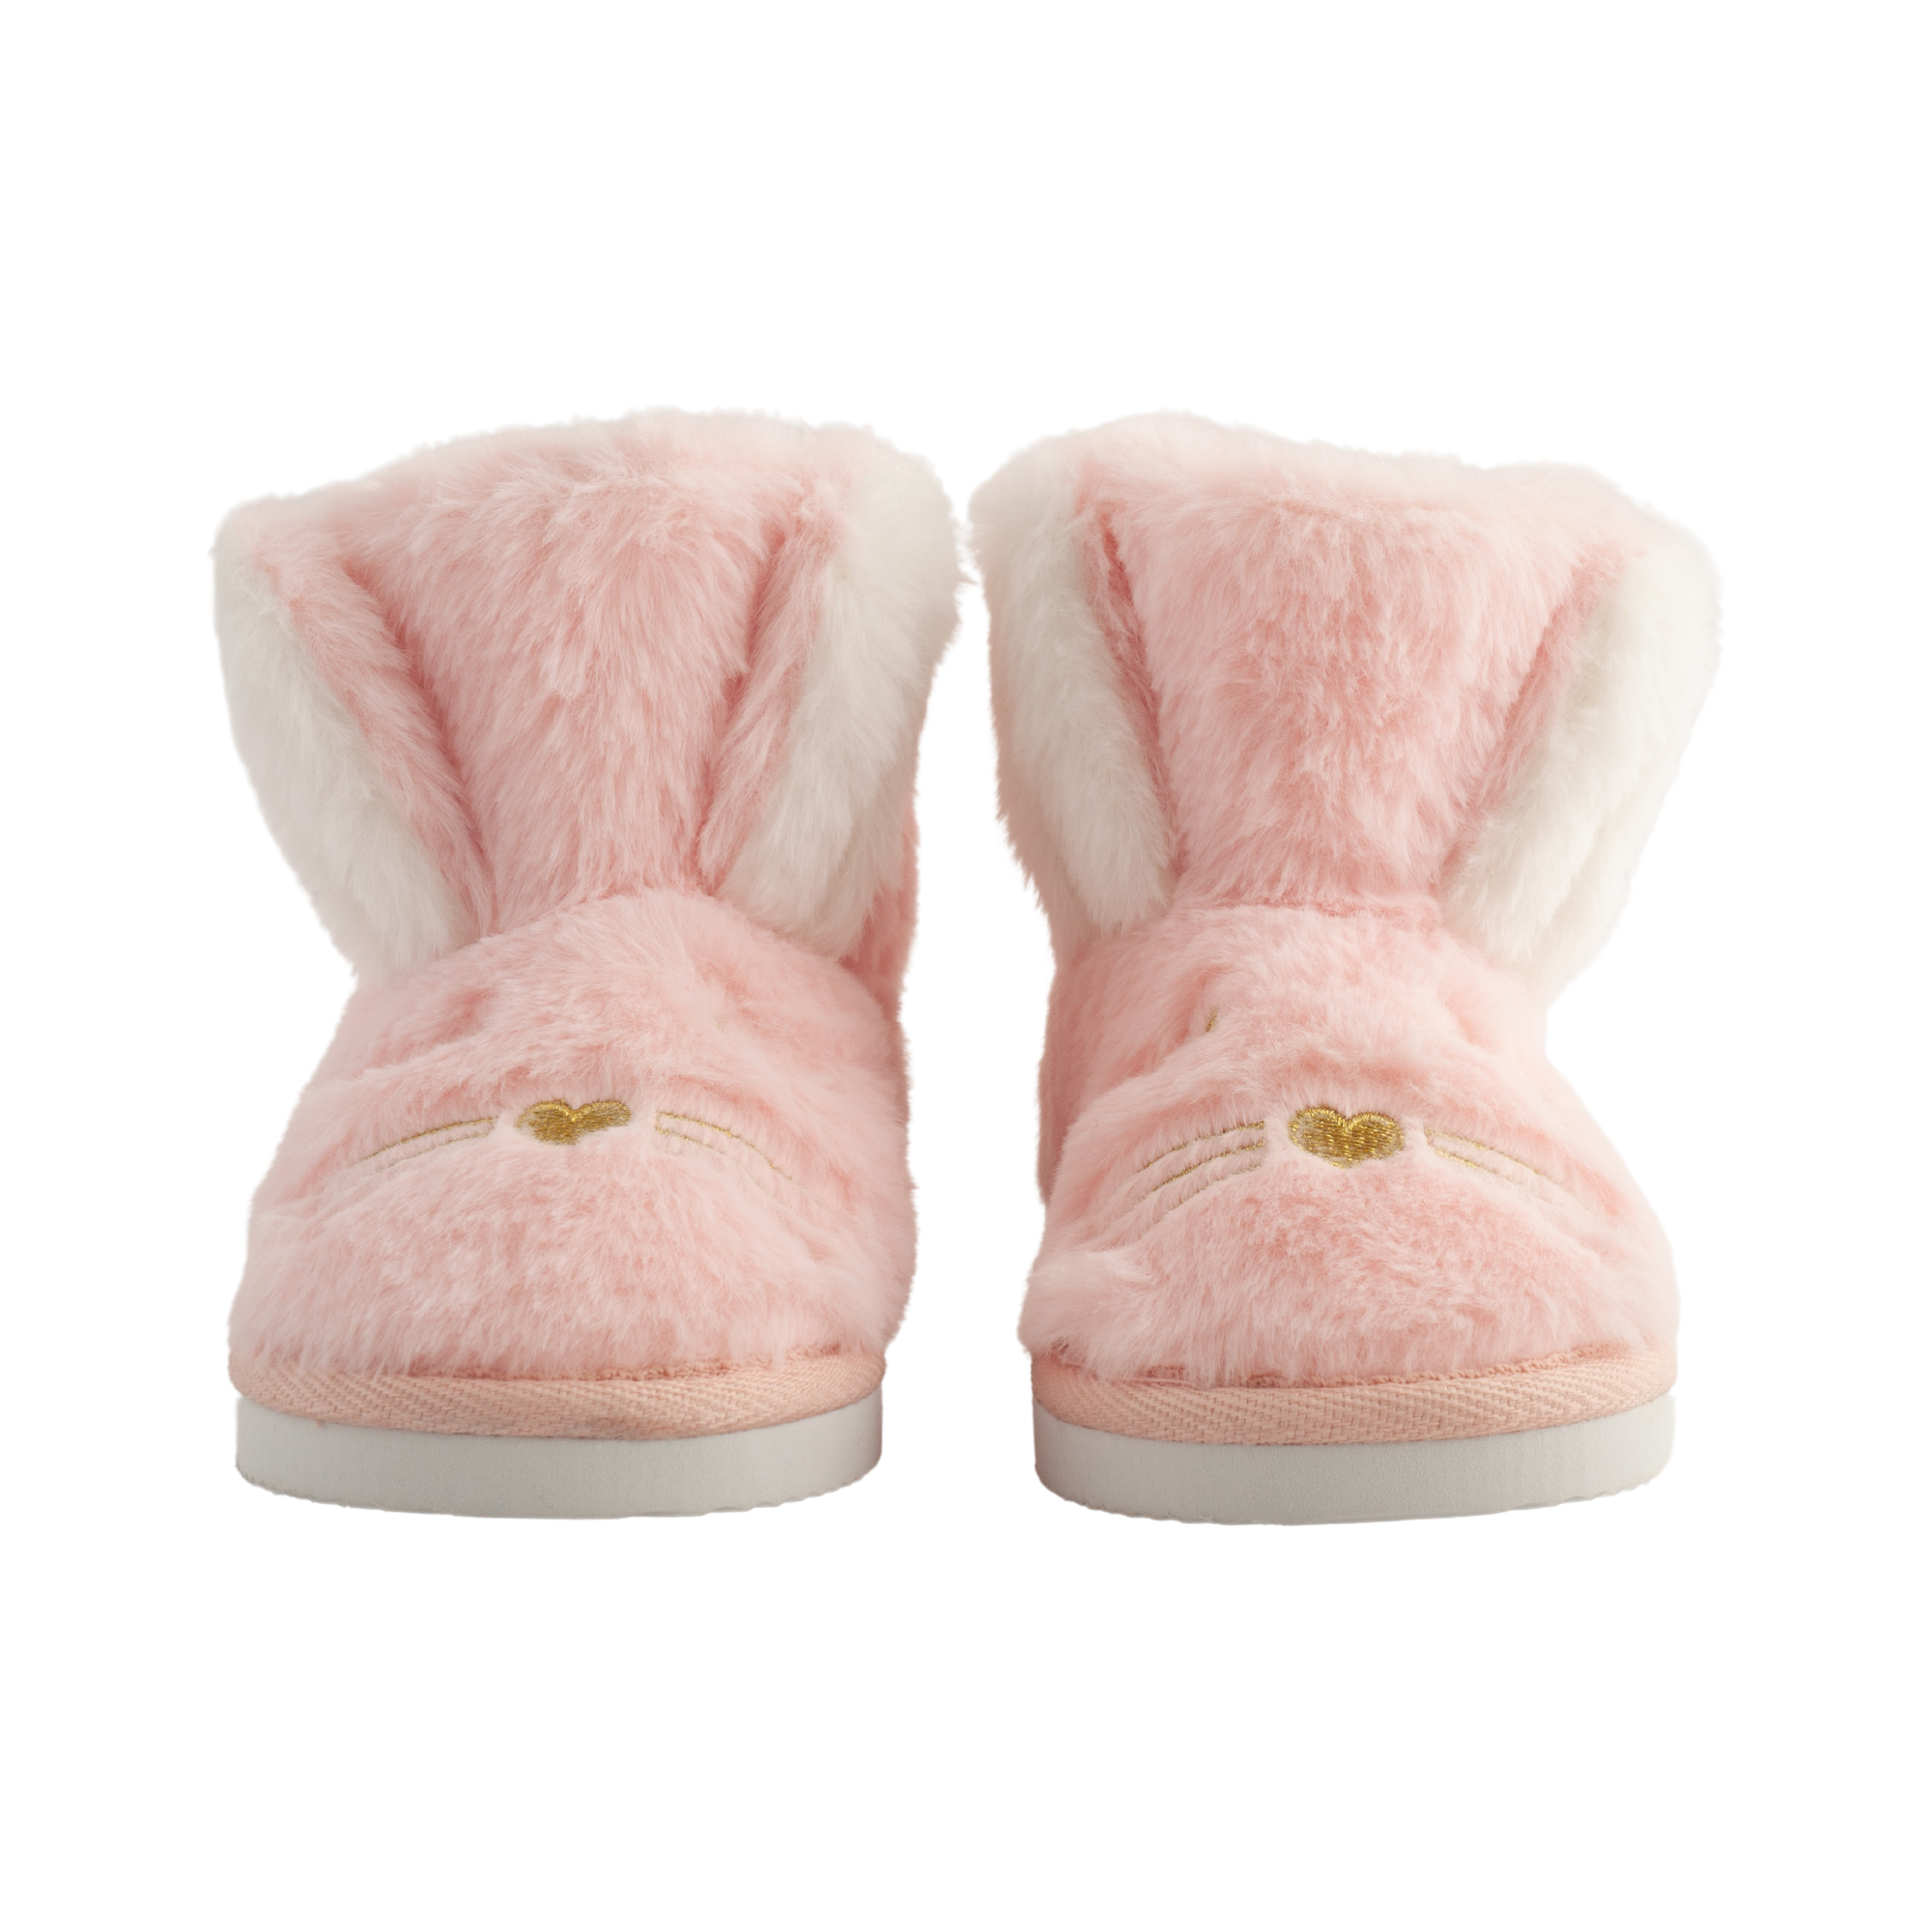 Novelty Slipper Boot - Pink Bunny Size 9-10